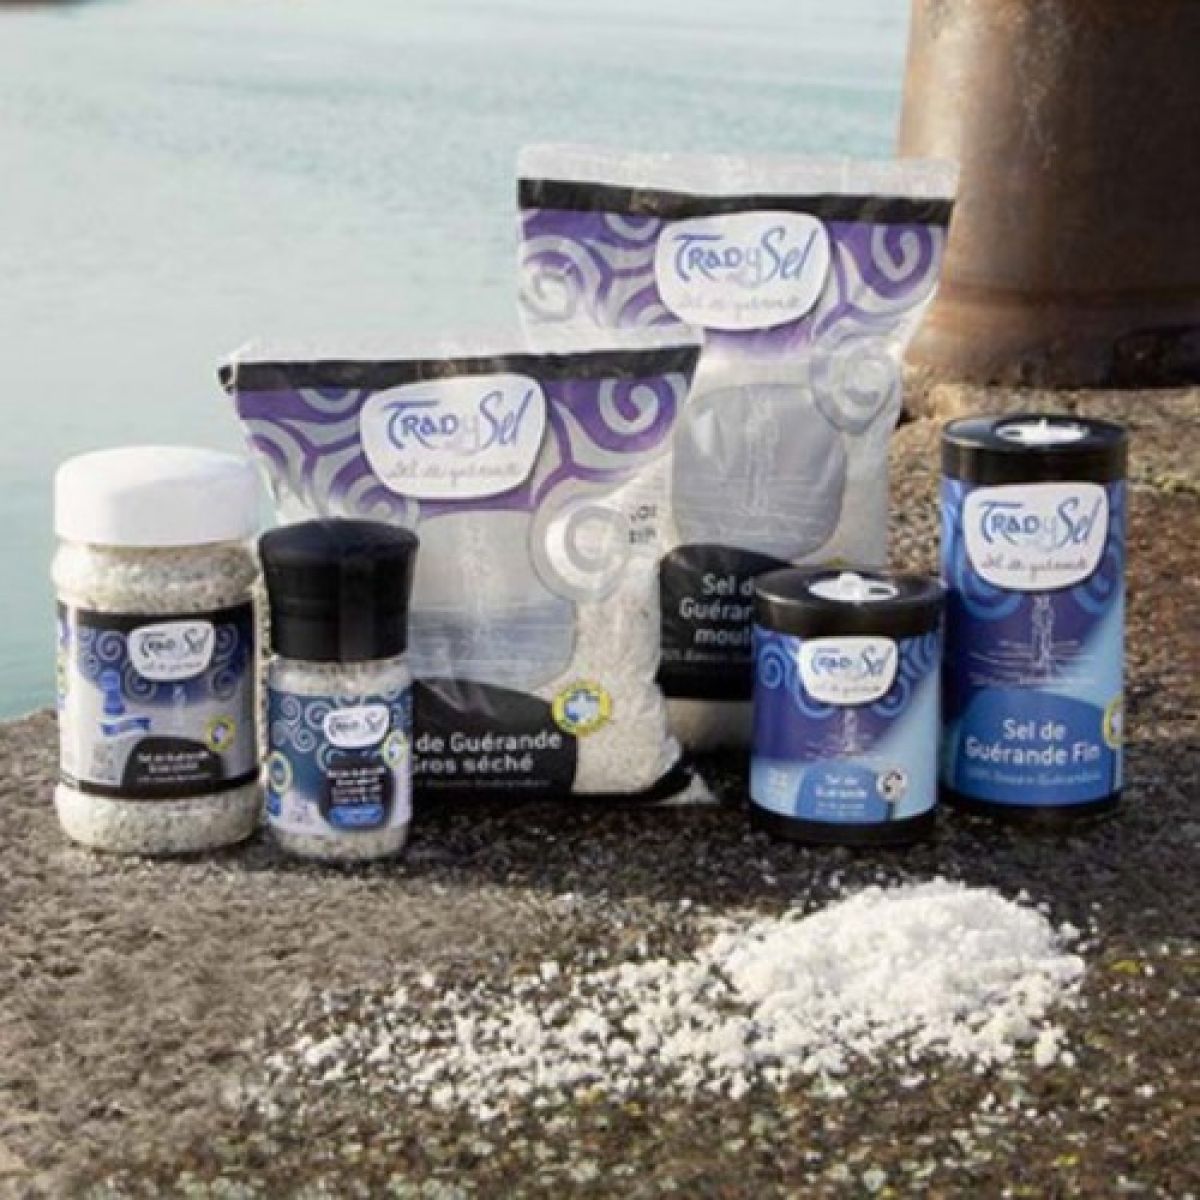 Celtic Sea Salt Sel de Guerande Refillable Grinder 70g